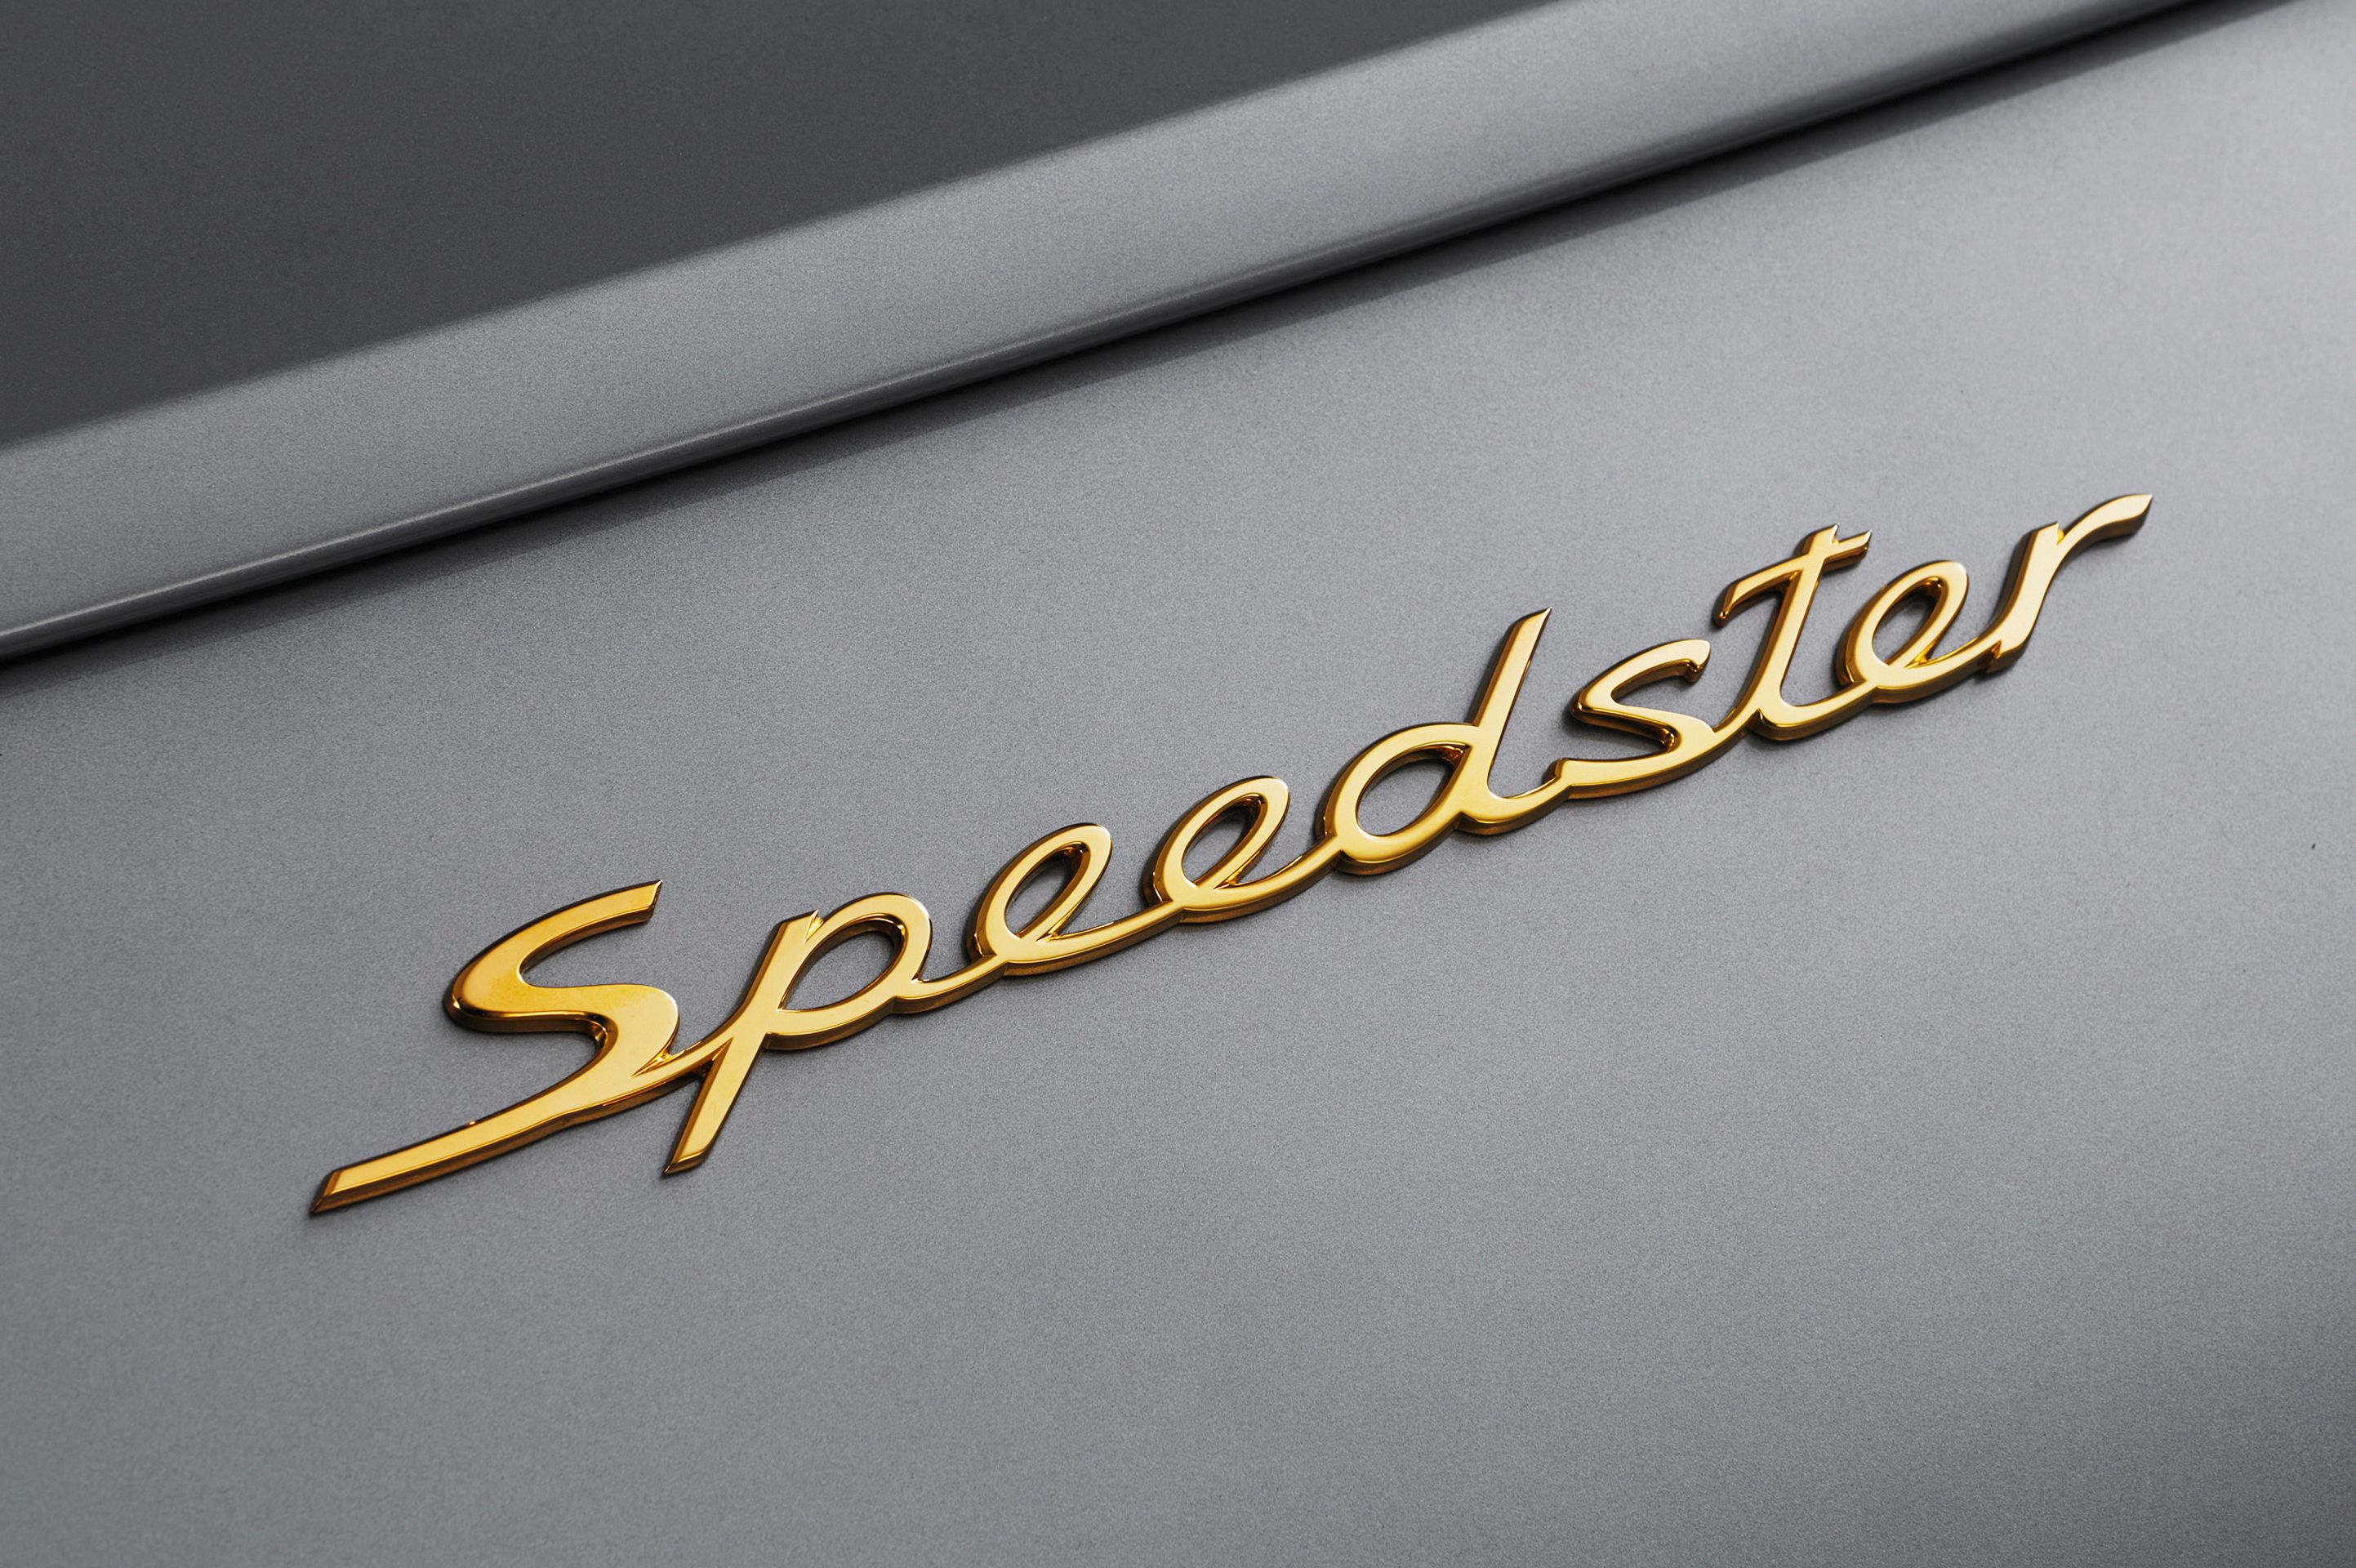 Porsche 911 Speedster Concept - 16 - Fotogalerie: Nádherný koncept Porsche 911 Speedster (14/14)